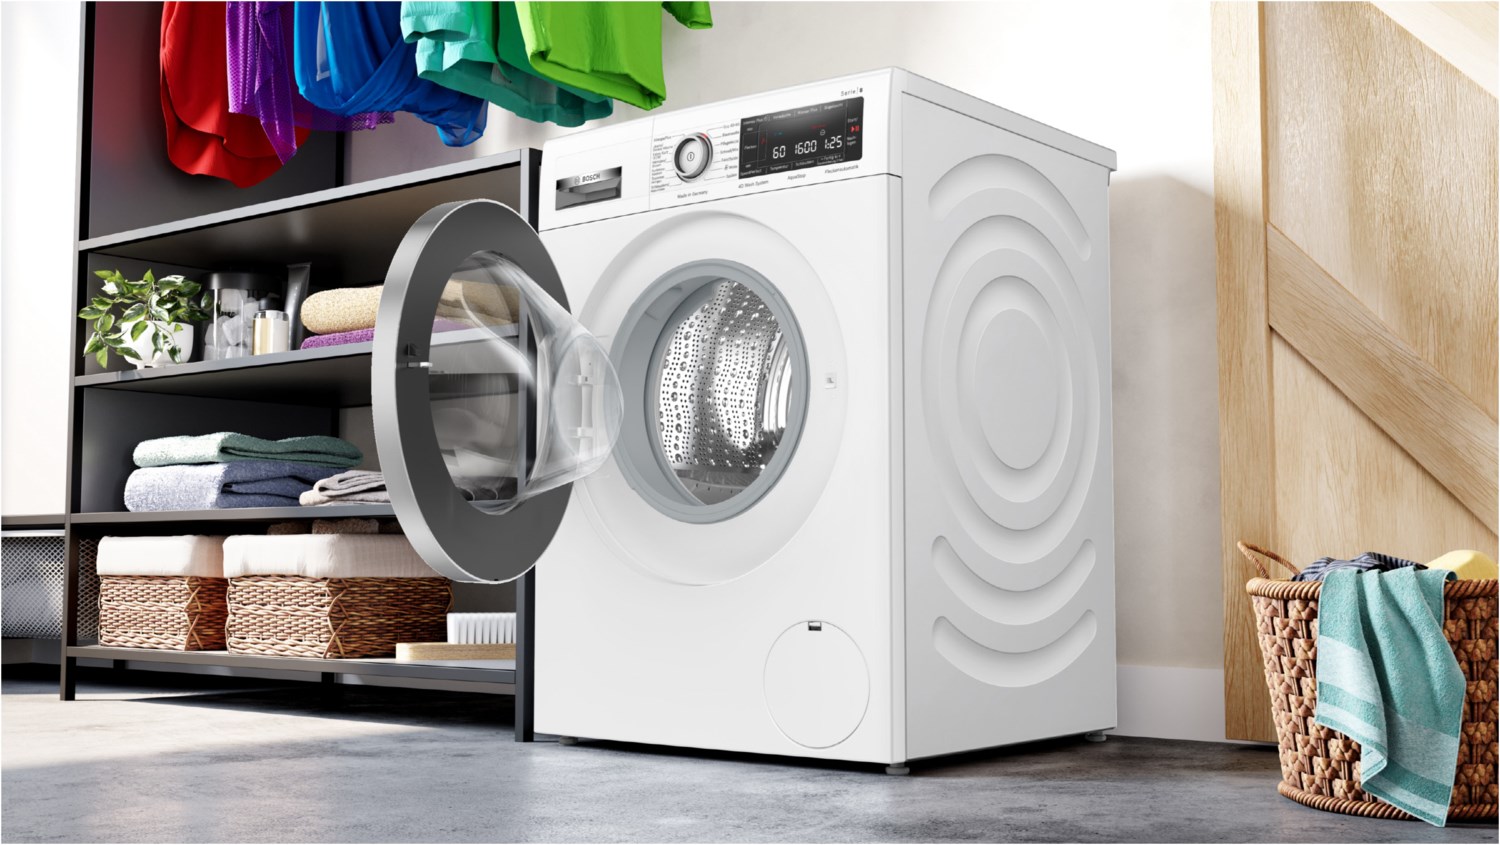 Bosch Serie 8 Waschmaschine 9 kg 1400 U/min.